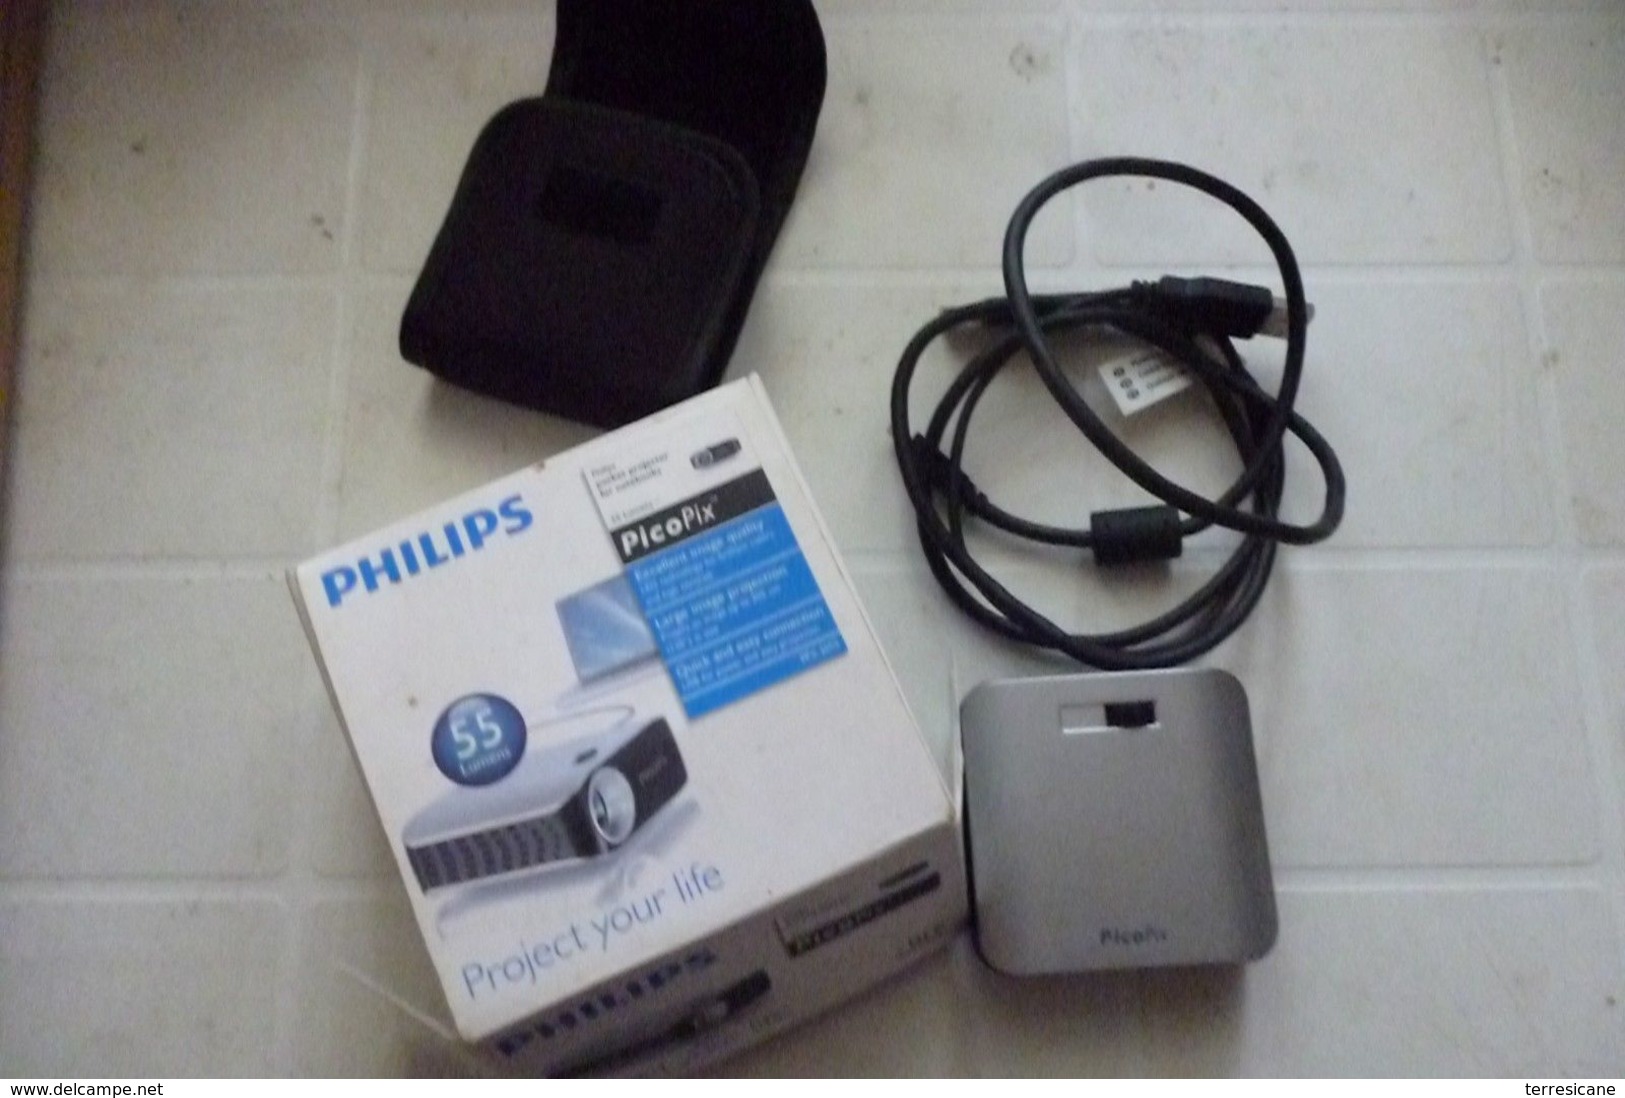 Philips Picopix 55 Pocket Projector Forb Notebooks Utenti Esperti - Projecteurs